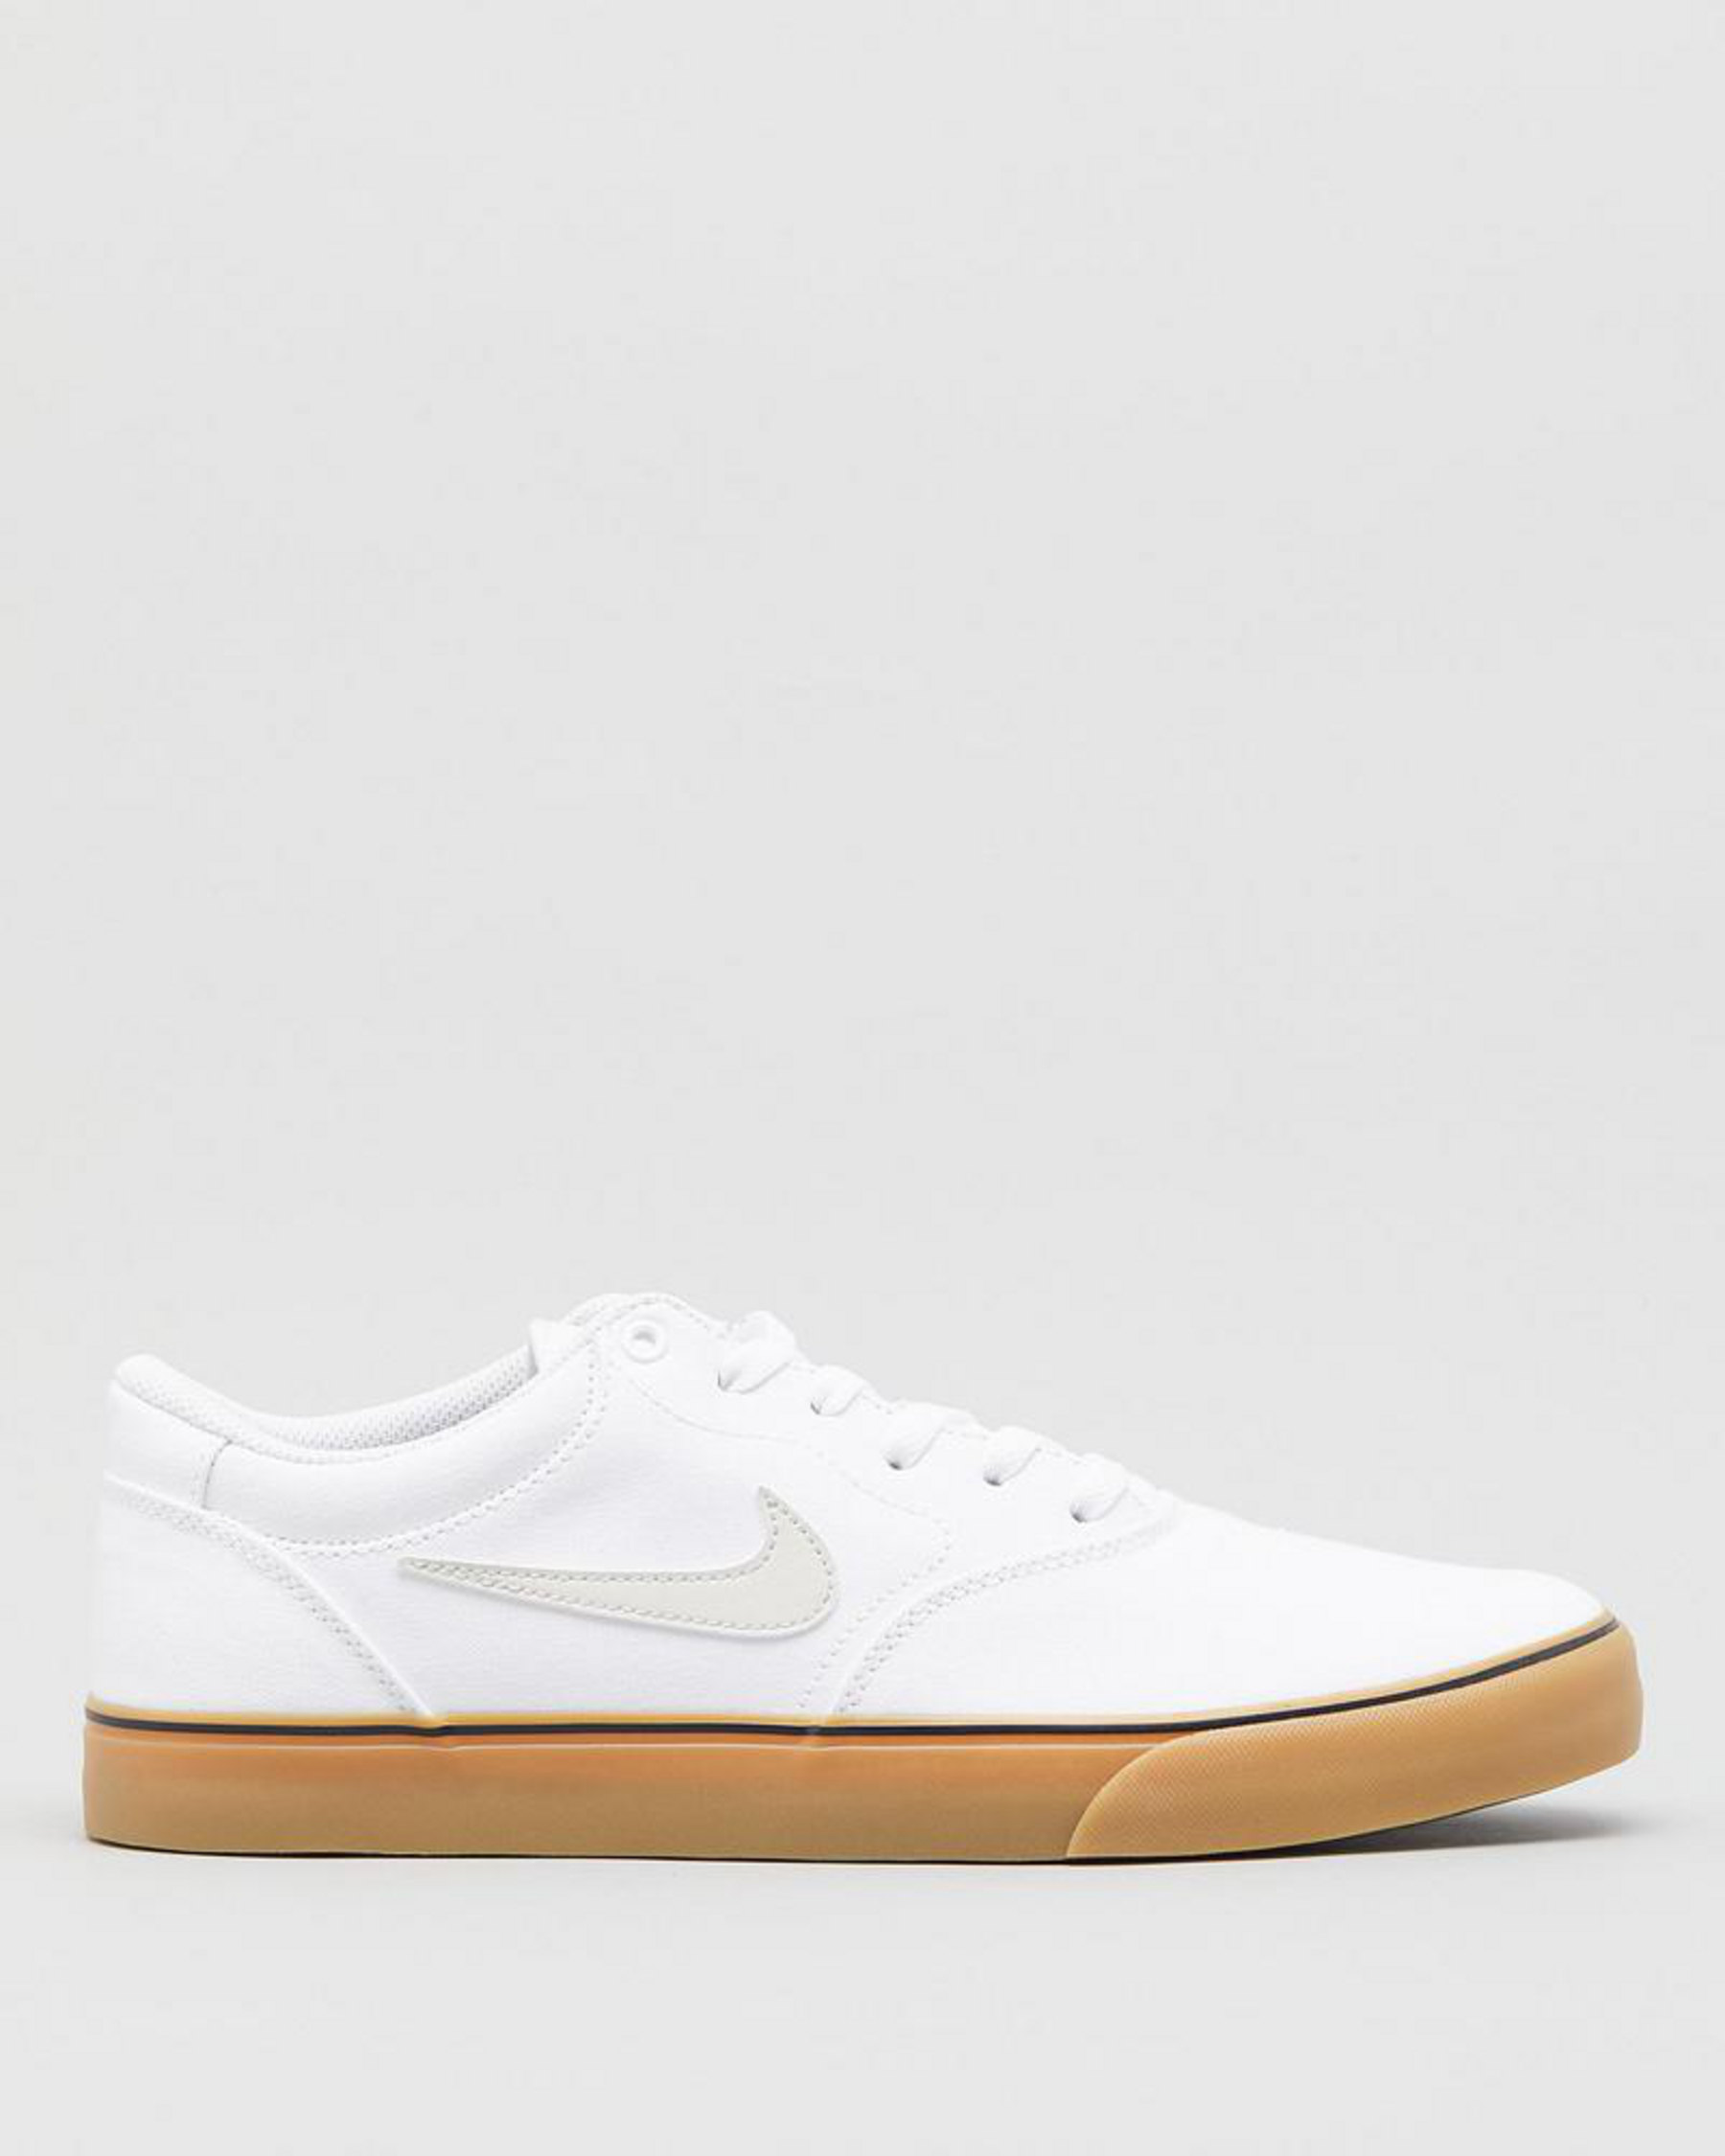 Nike Chron 2 Canvas Shoes In White/lt Bone-white-gum - Fast Shipping ...